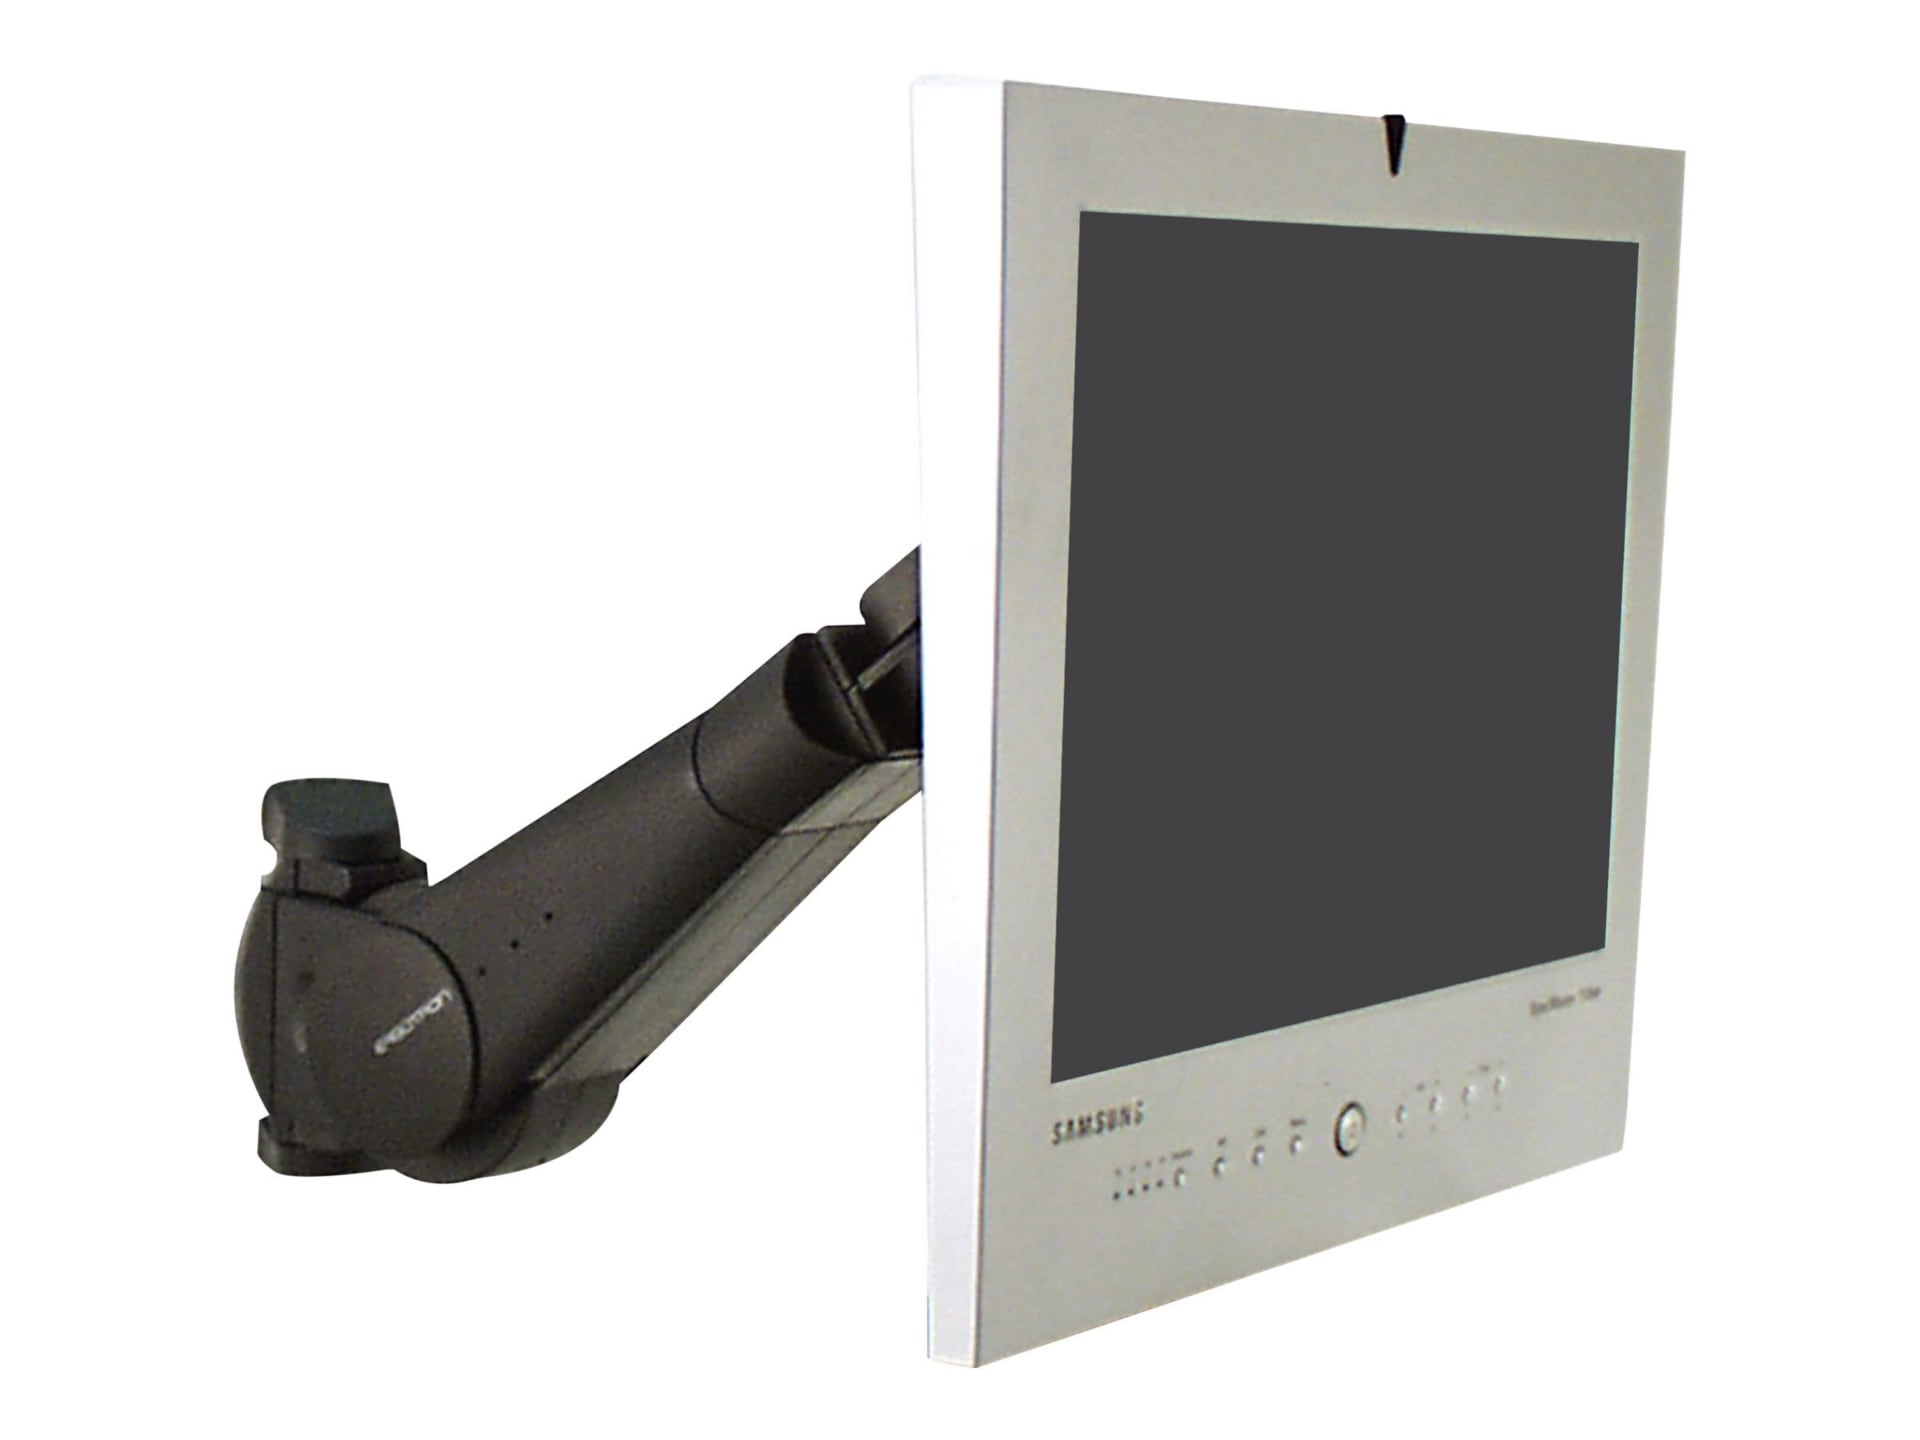 Ergotron 400 Series Wall Monitor Arm - Black